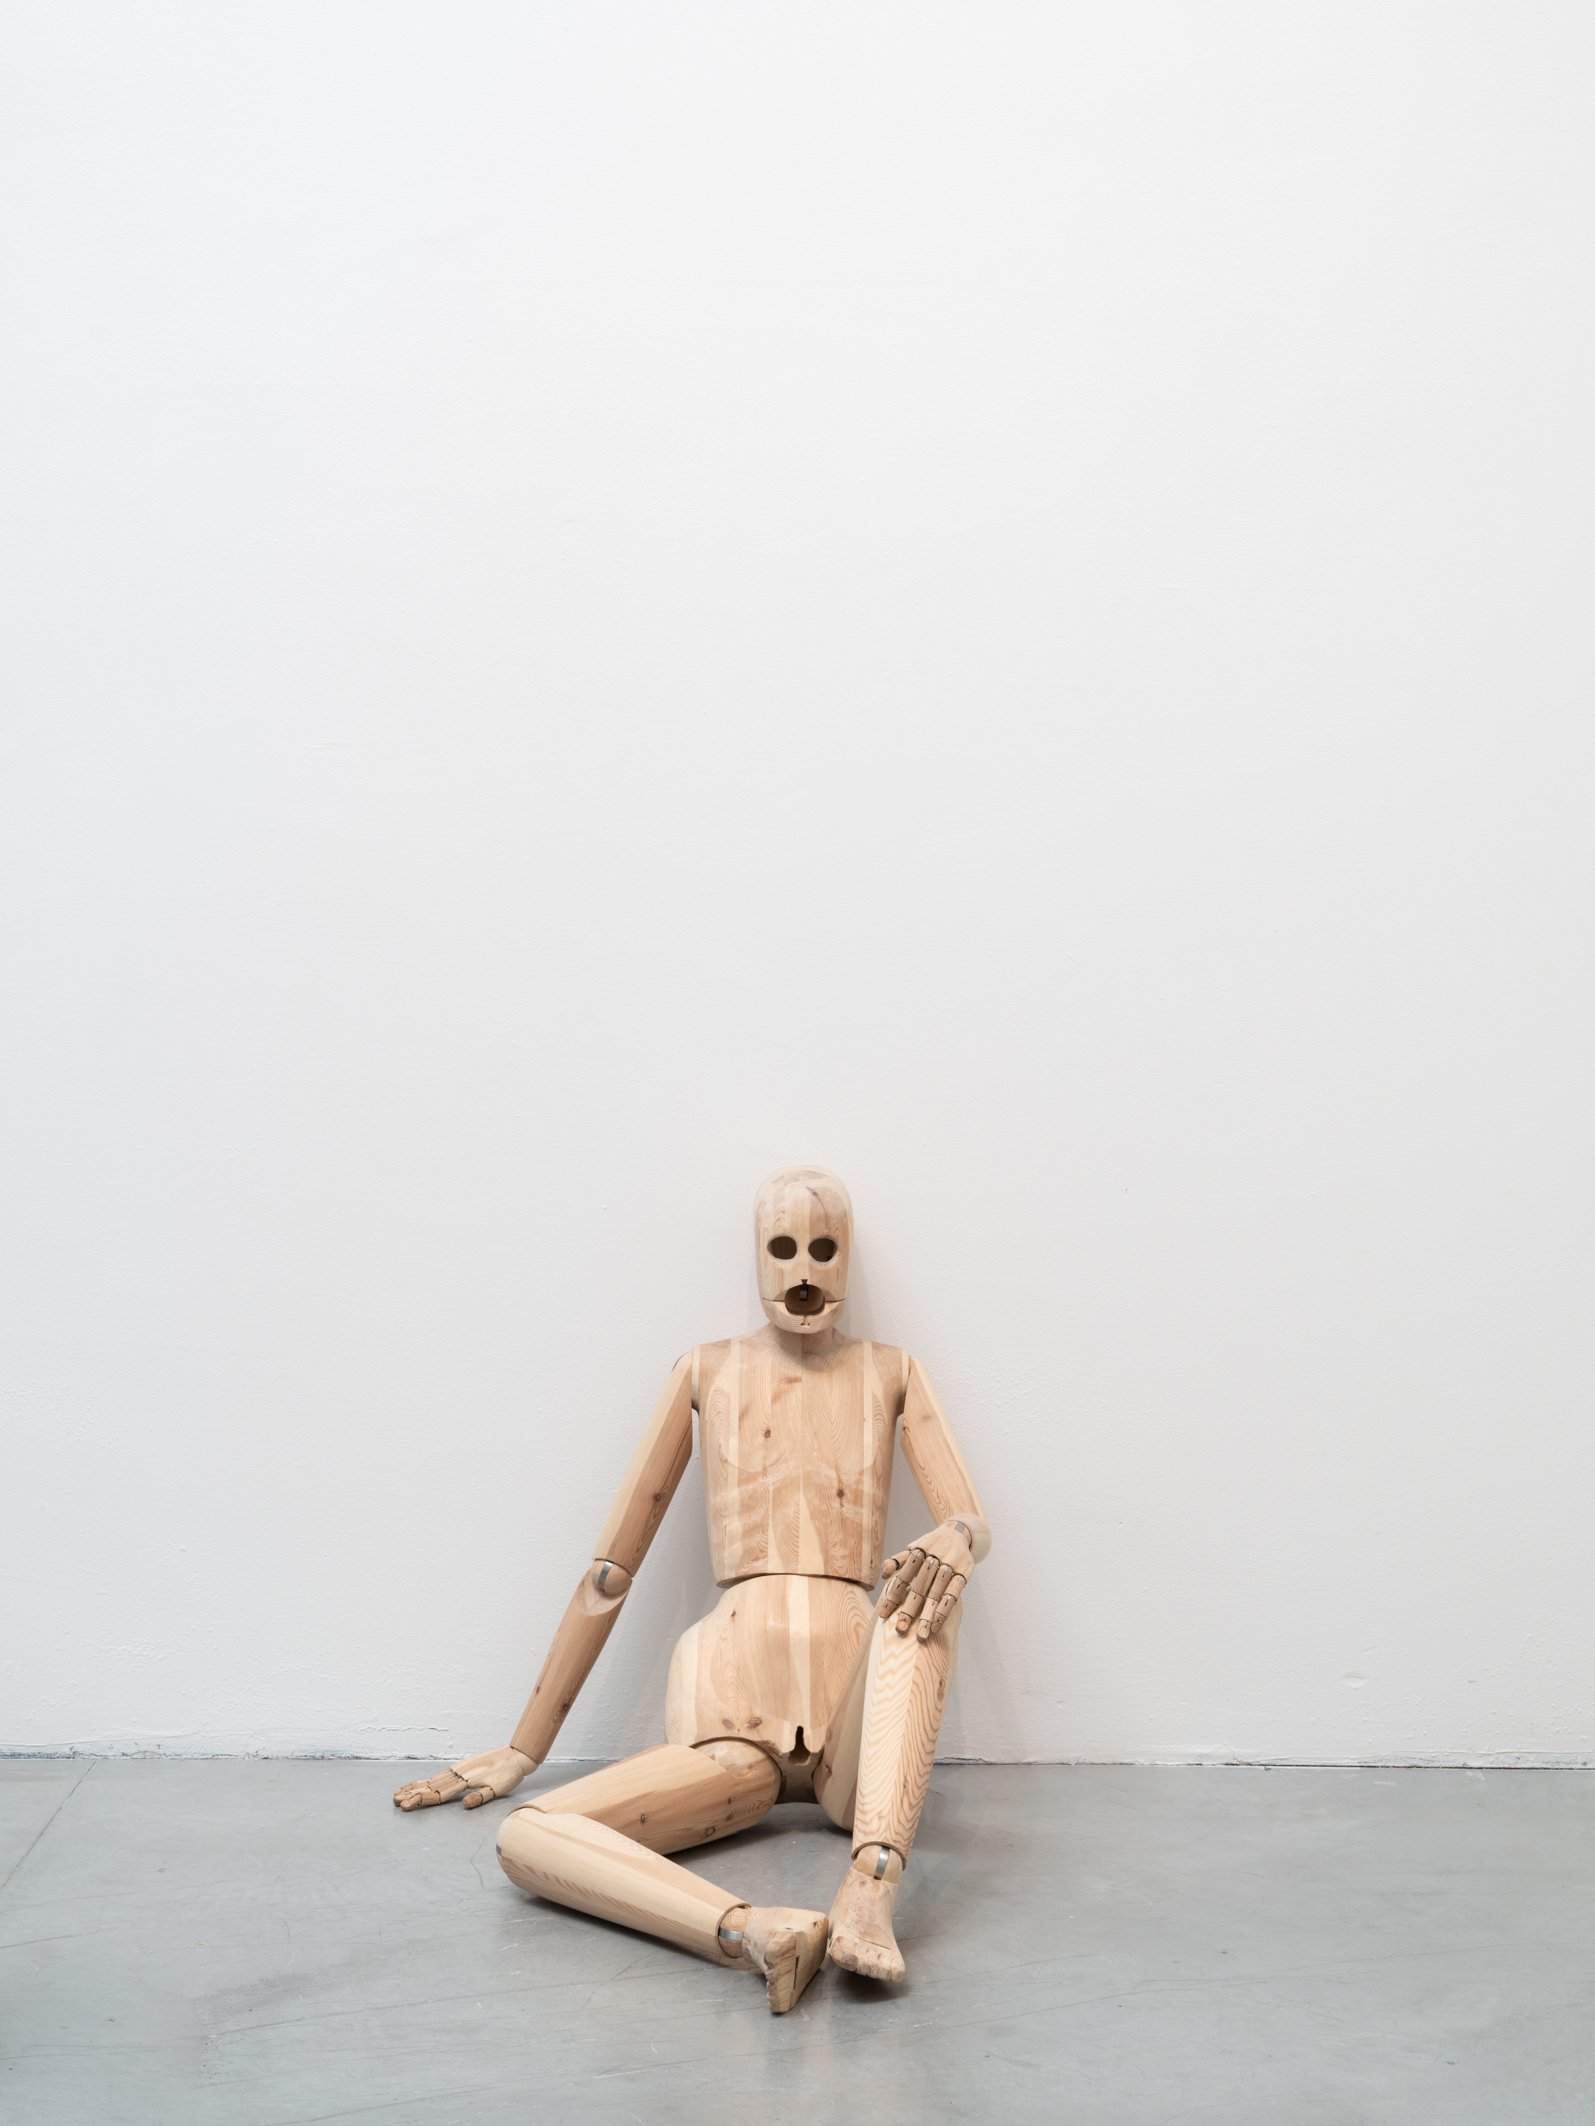 Sidsel Meineche Hansen, Untitled (Sex Robot), ball jointed wooden doll, 176 × 25 × 40 cm (69 1/4 x 9 7/8 x 15 3/4 in), 2018–2019. Installation view, The Milk of Dreams, 59th International Art Exhibition – La Biennale di Venezia, Venice, 2022